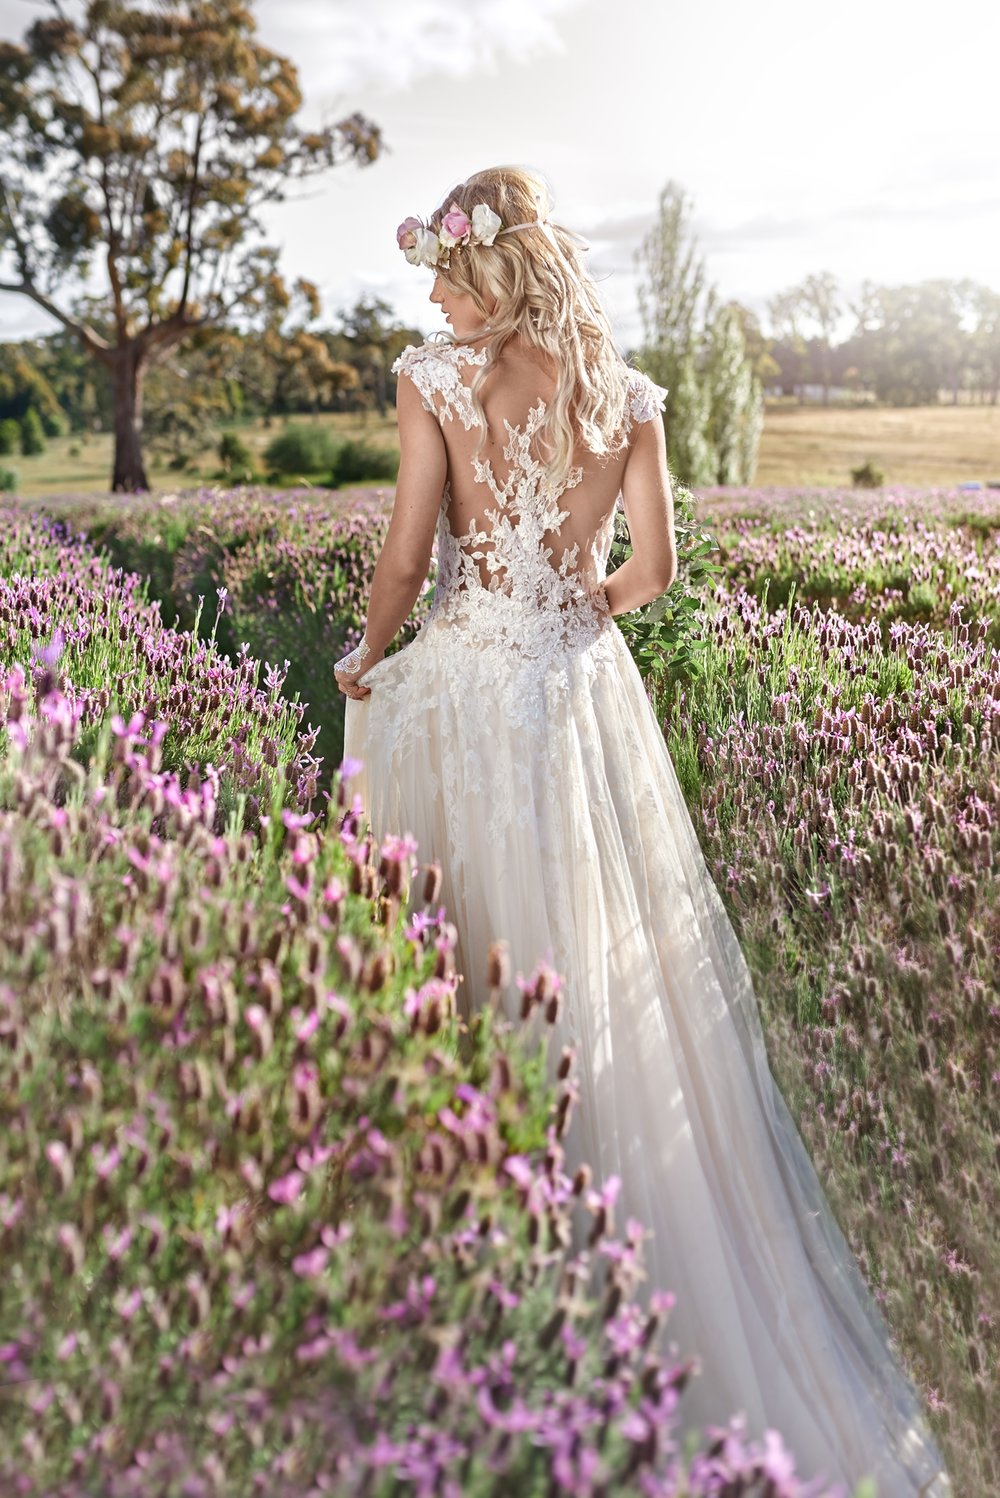 Victoria-Australia-luxury-wedding-inspiration-DSC_3257-1.jpg